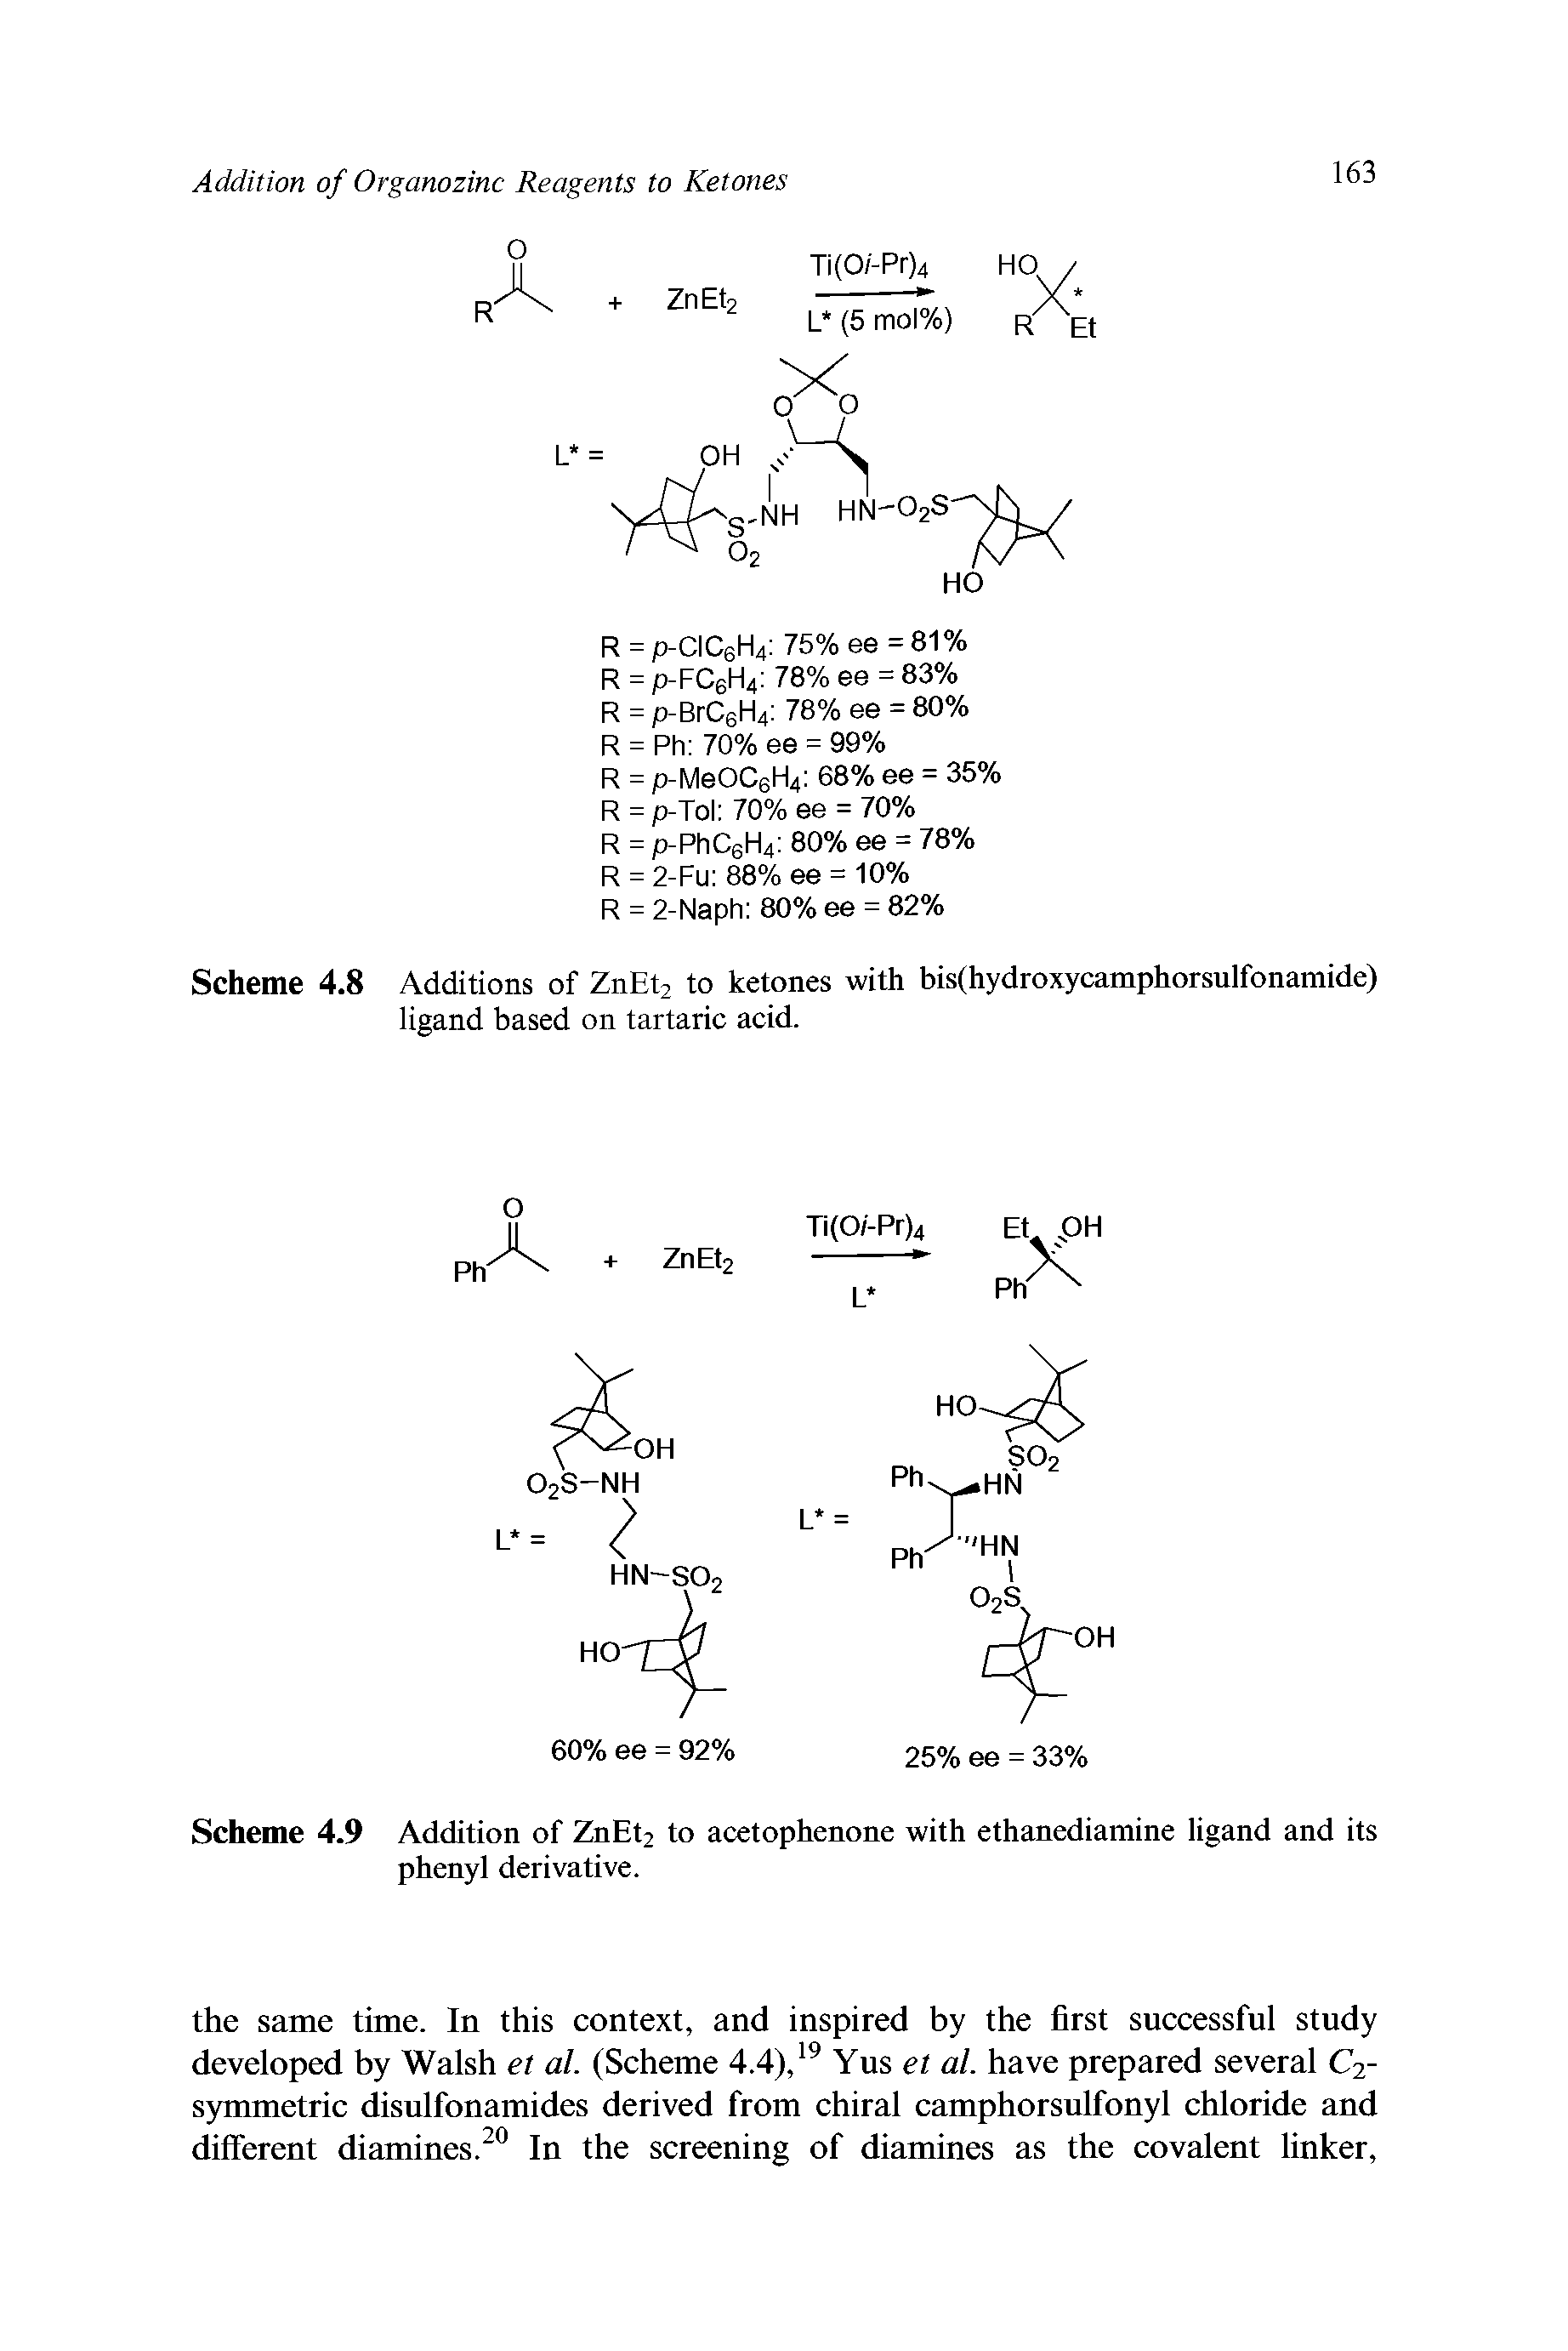 Scheme 4.8 Additions of ZnEtj to ketones with bis(hydroxycamphorsulfonamide) ligand based on tartaric acid.